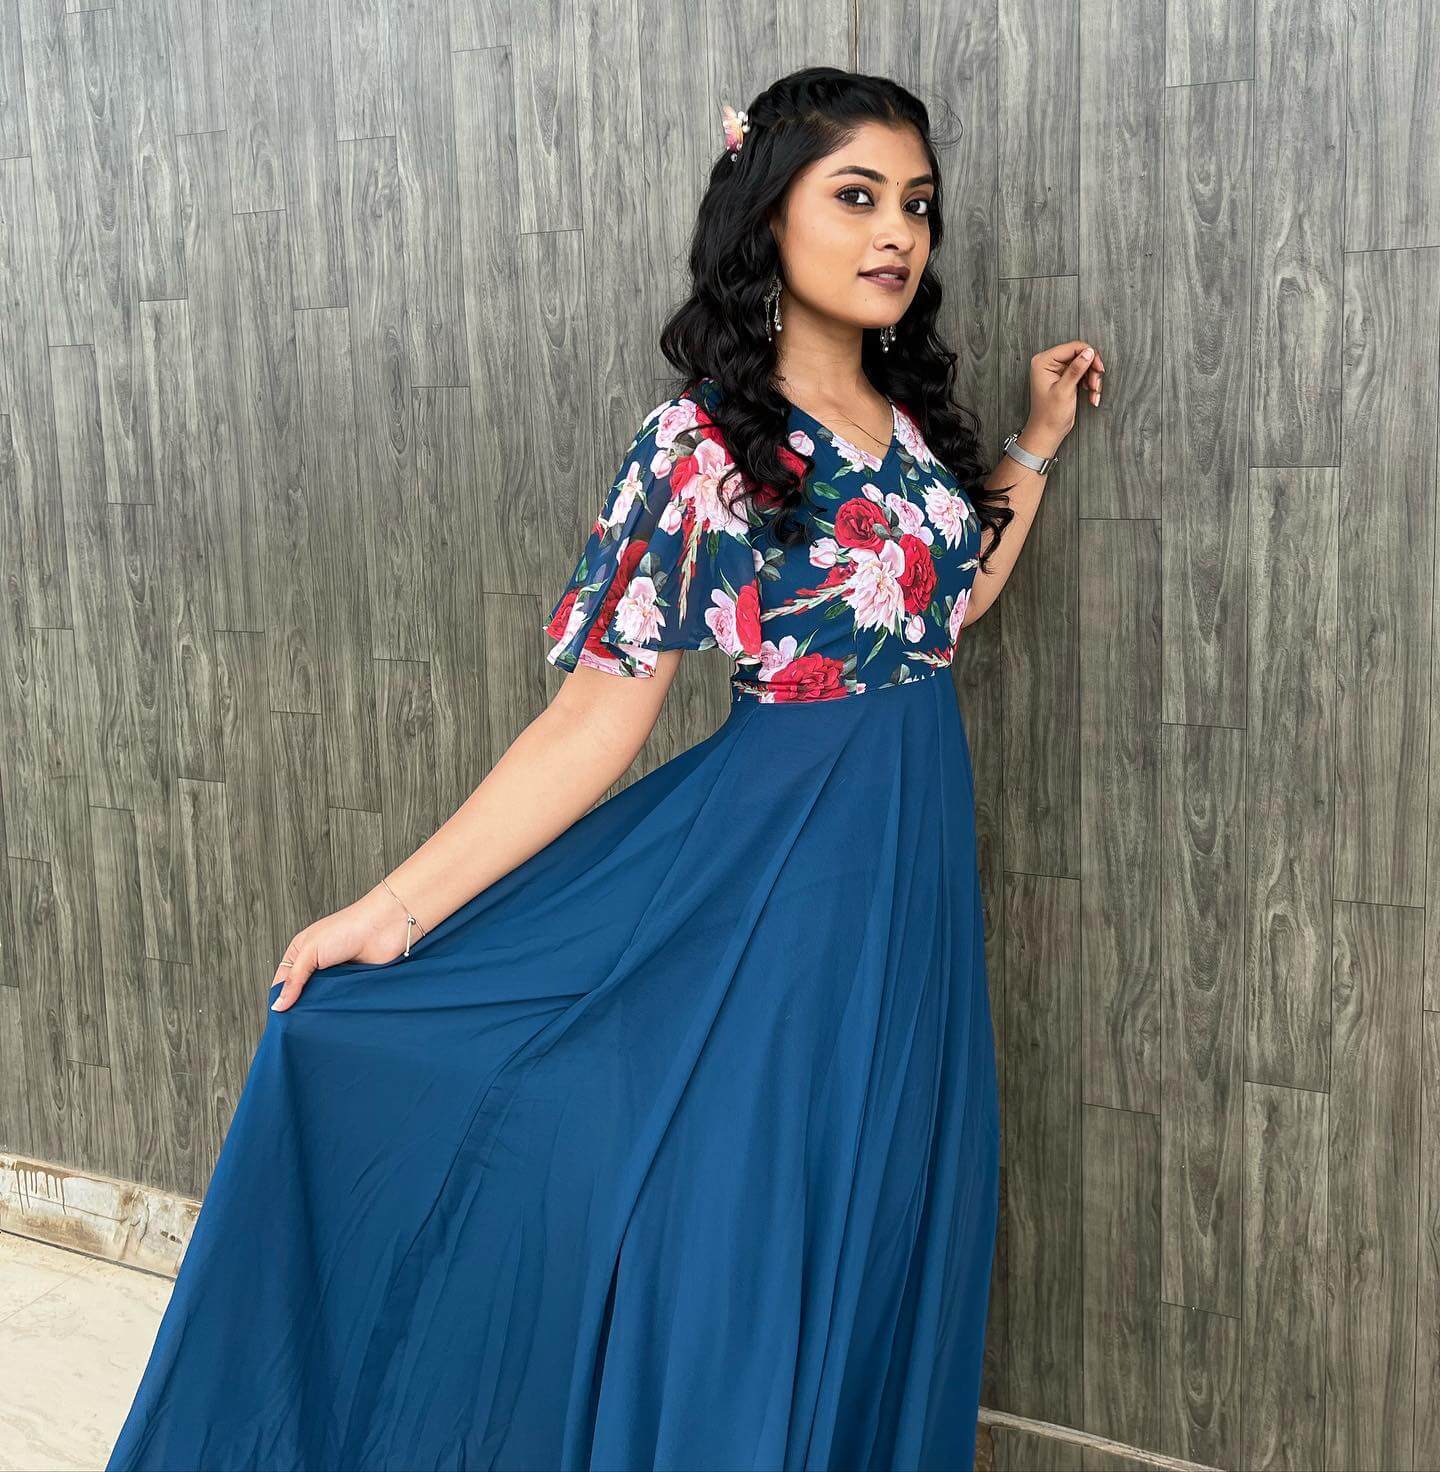 Ammu Abhirami Flared Cobalt Blue Floral Printed Dress Radiant Looks & Outfits